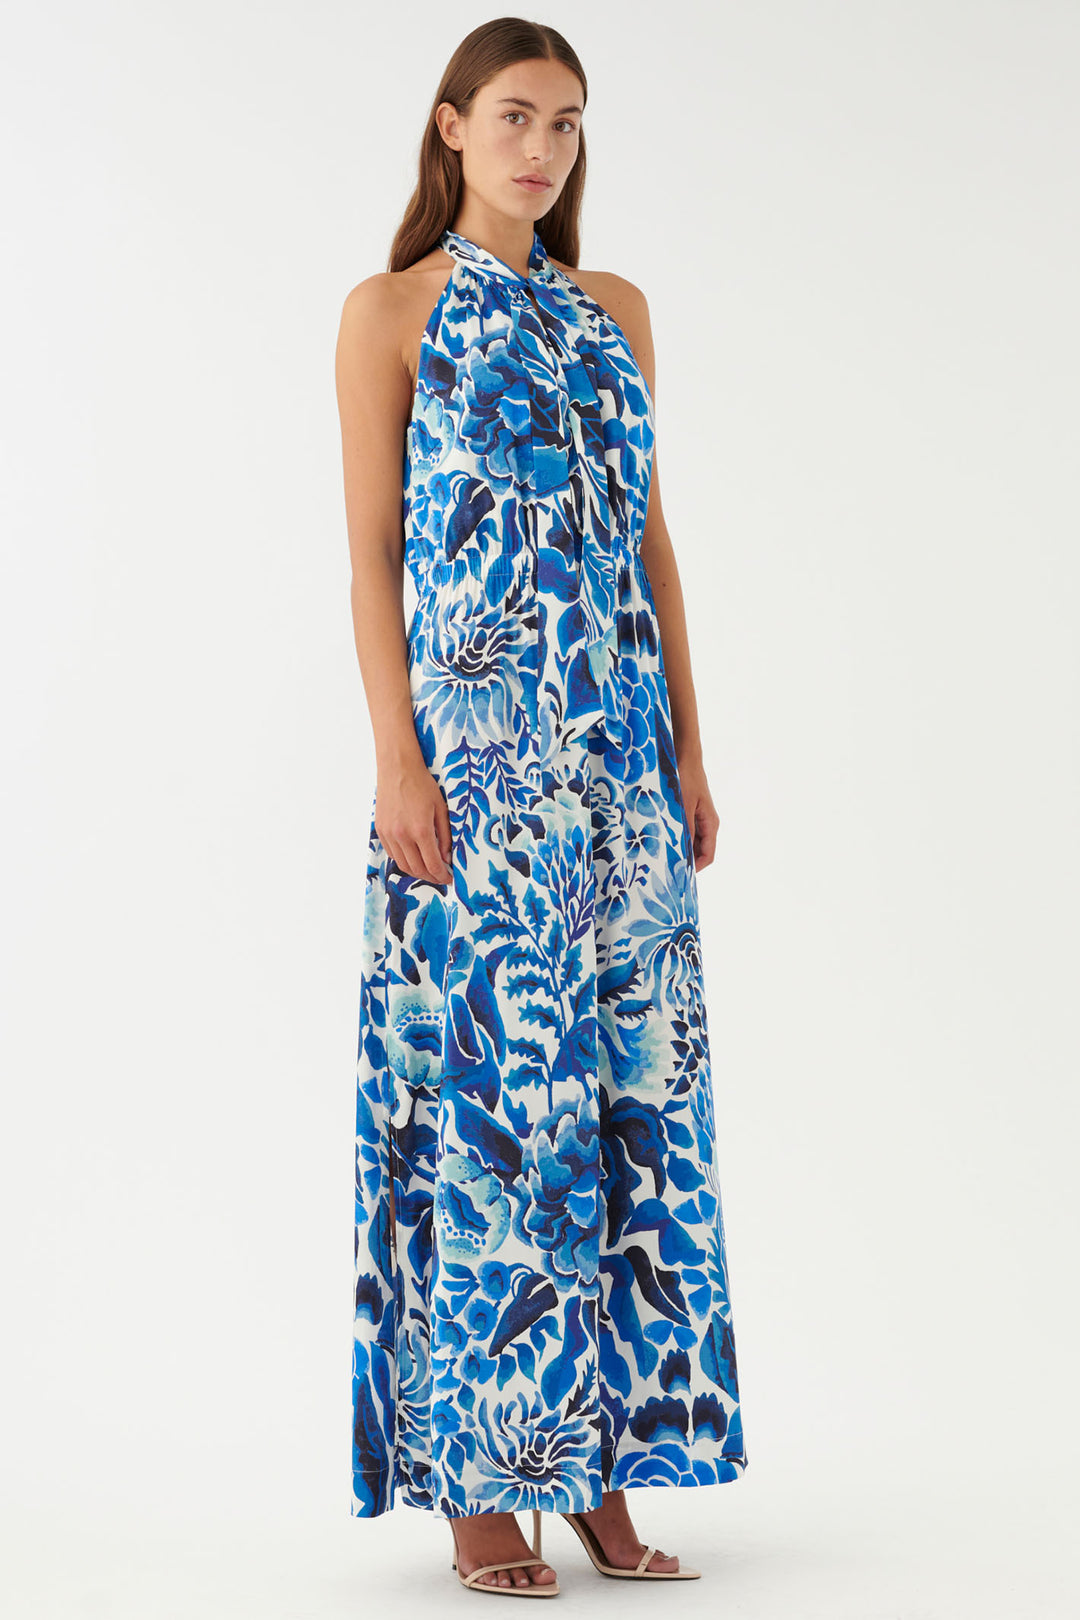 Dea Kudibal Nattiedea 1800124 5761 Magana Optical Blue Print Silk Dress - Olivia Grace Fashion